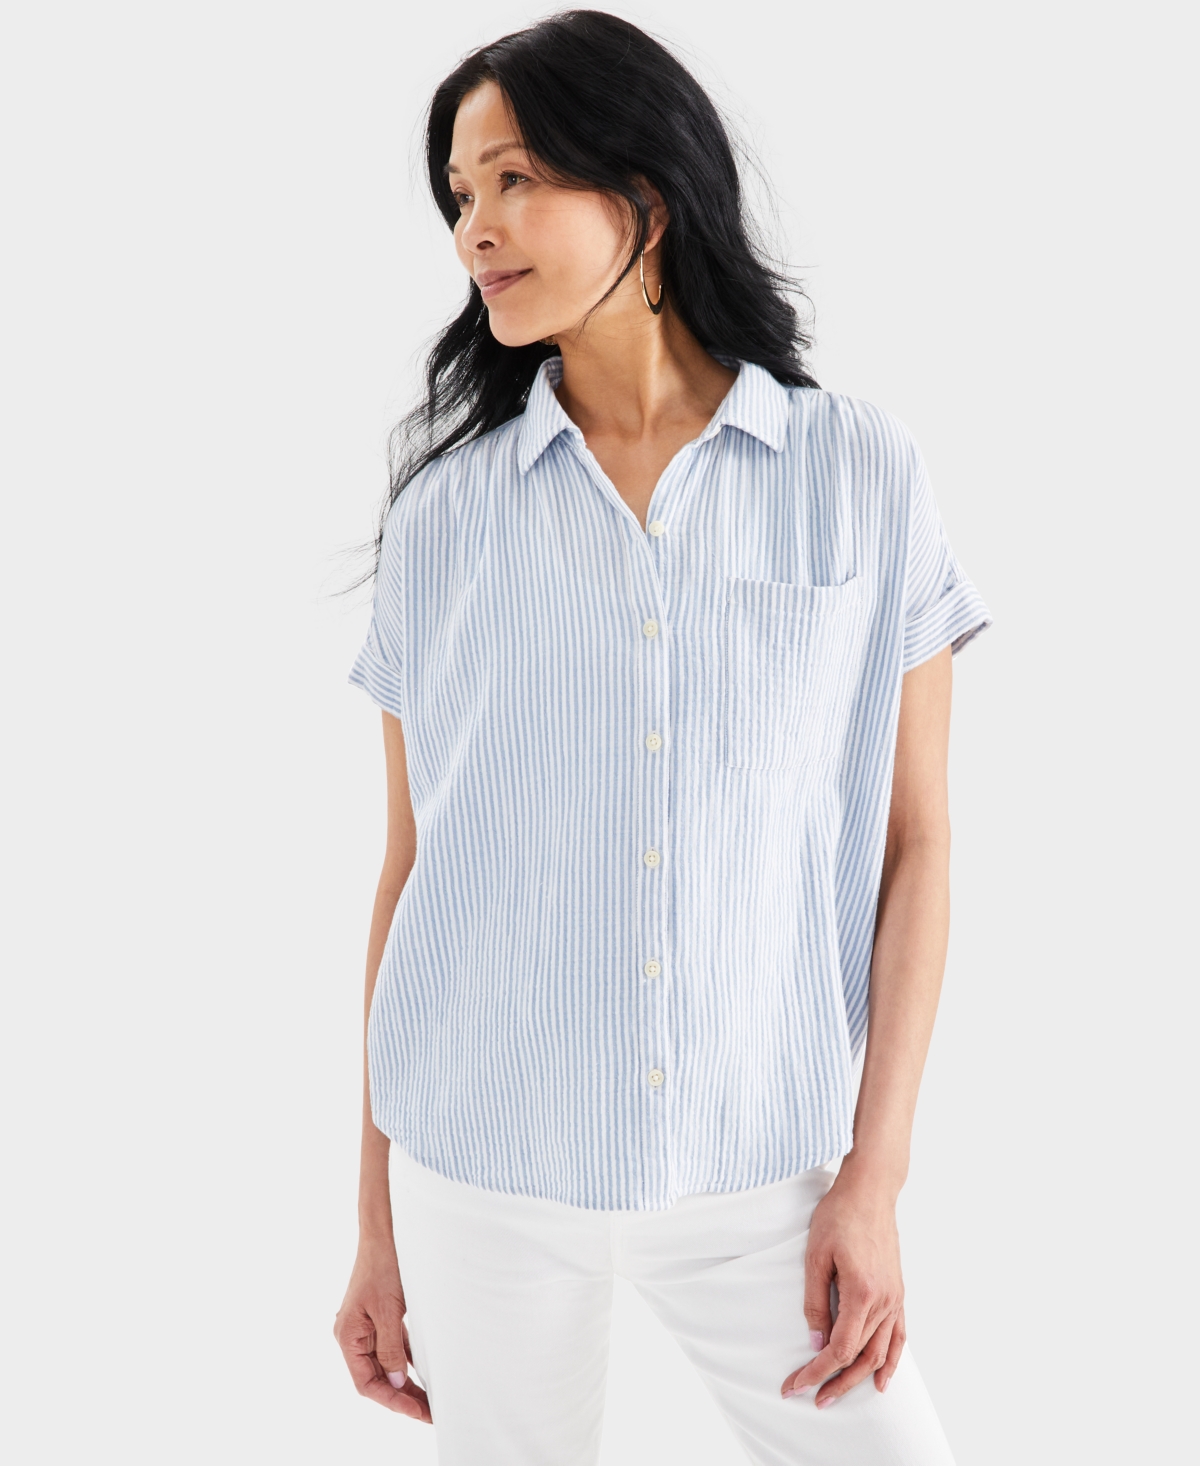 Petite Cotton Gauze Camp Shirt, Created for Macy's - Feeder Blue